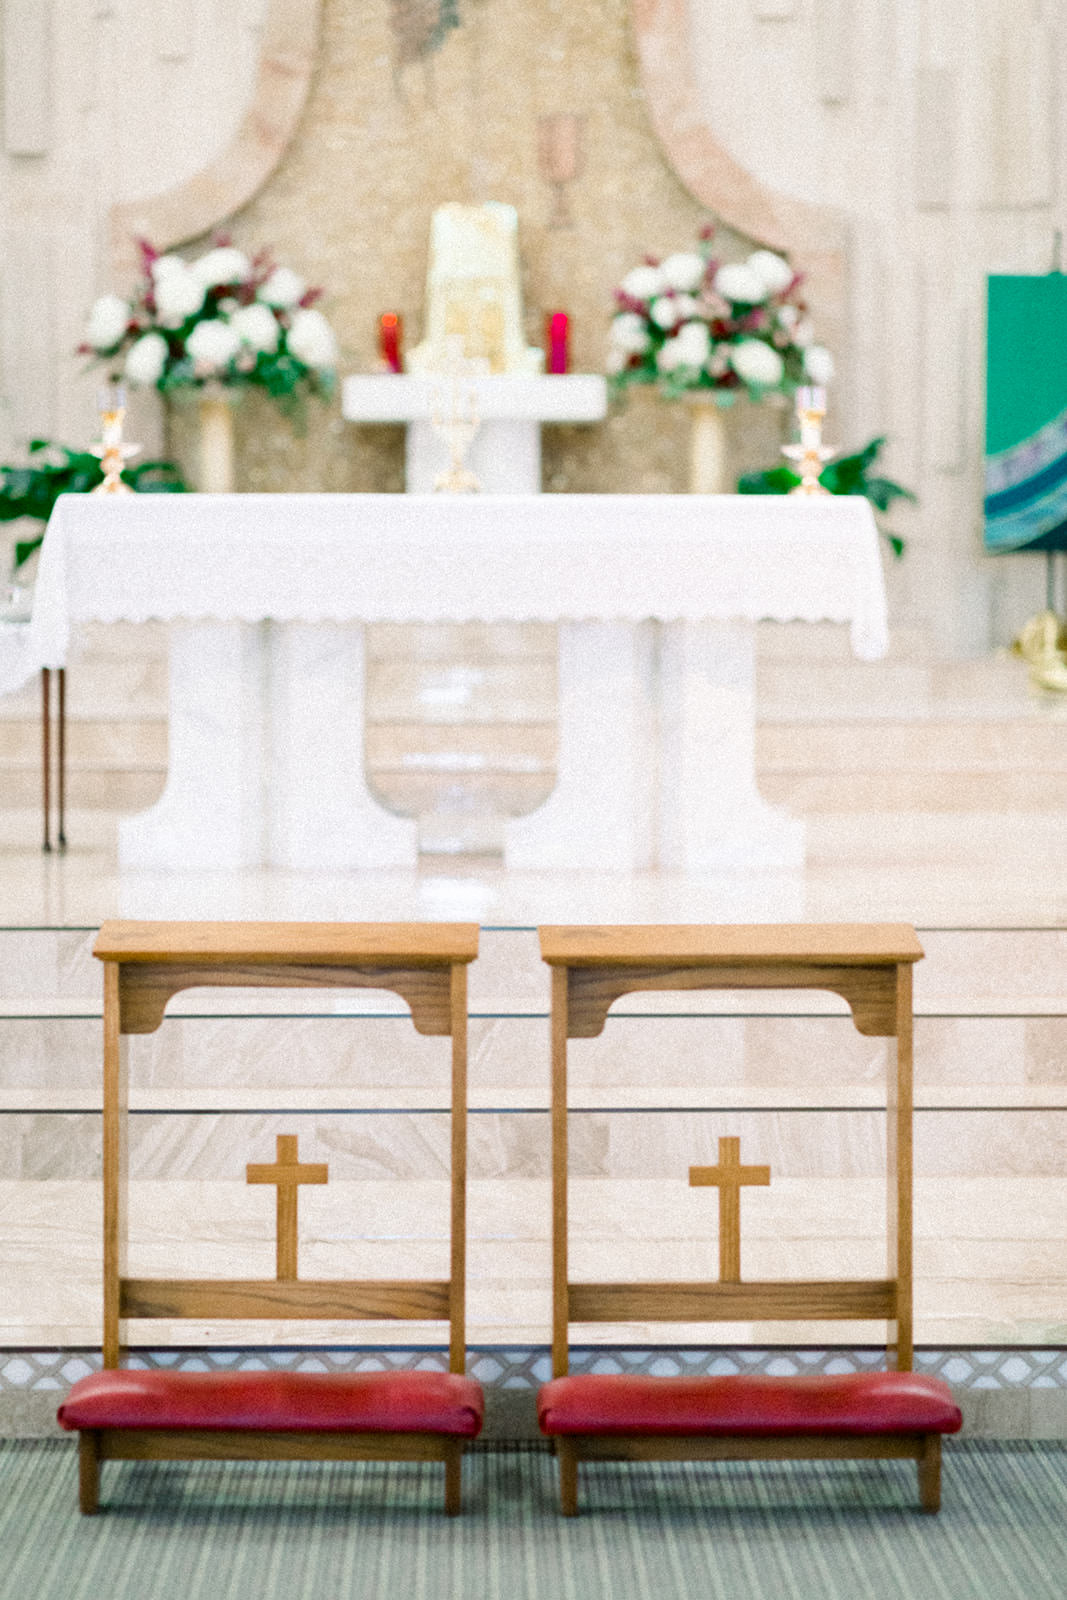 Traditional Catholic Church Pews Wedding Ceremony Altar | Tampa Bay Wedding Photographer Shauna and Jordon Photography | St. Pete Wedding Venue St. John Vianney Catholic Church